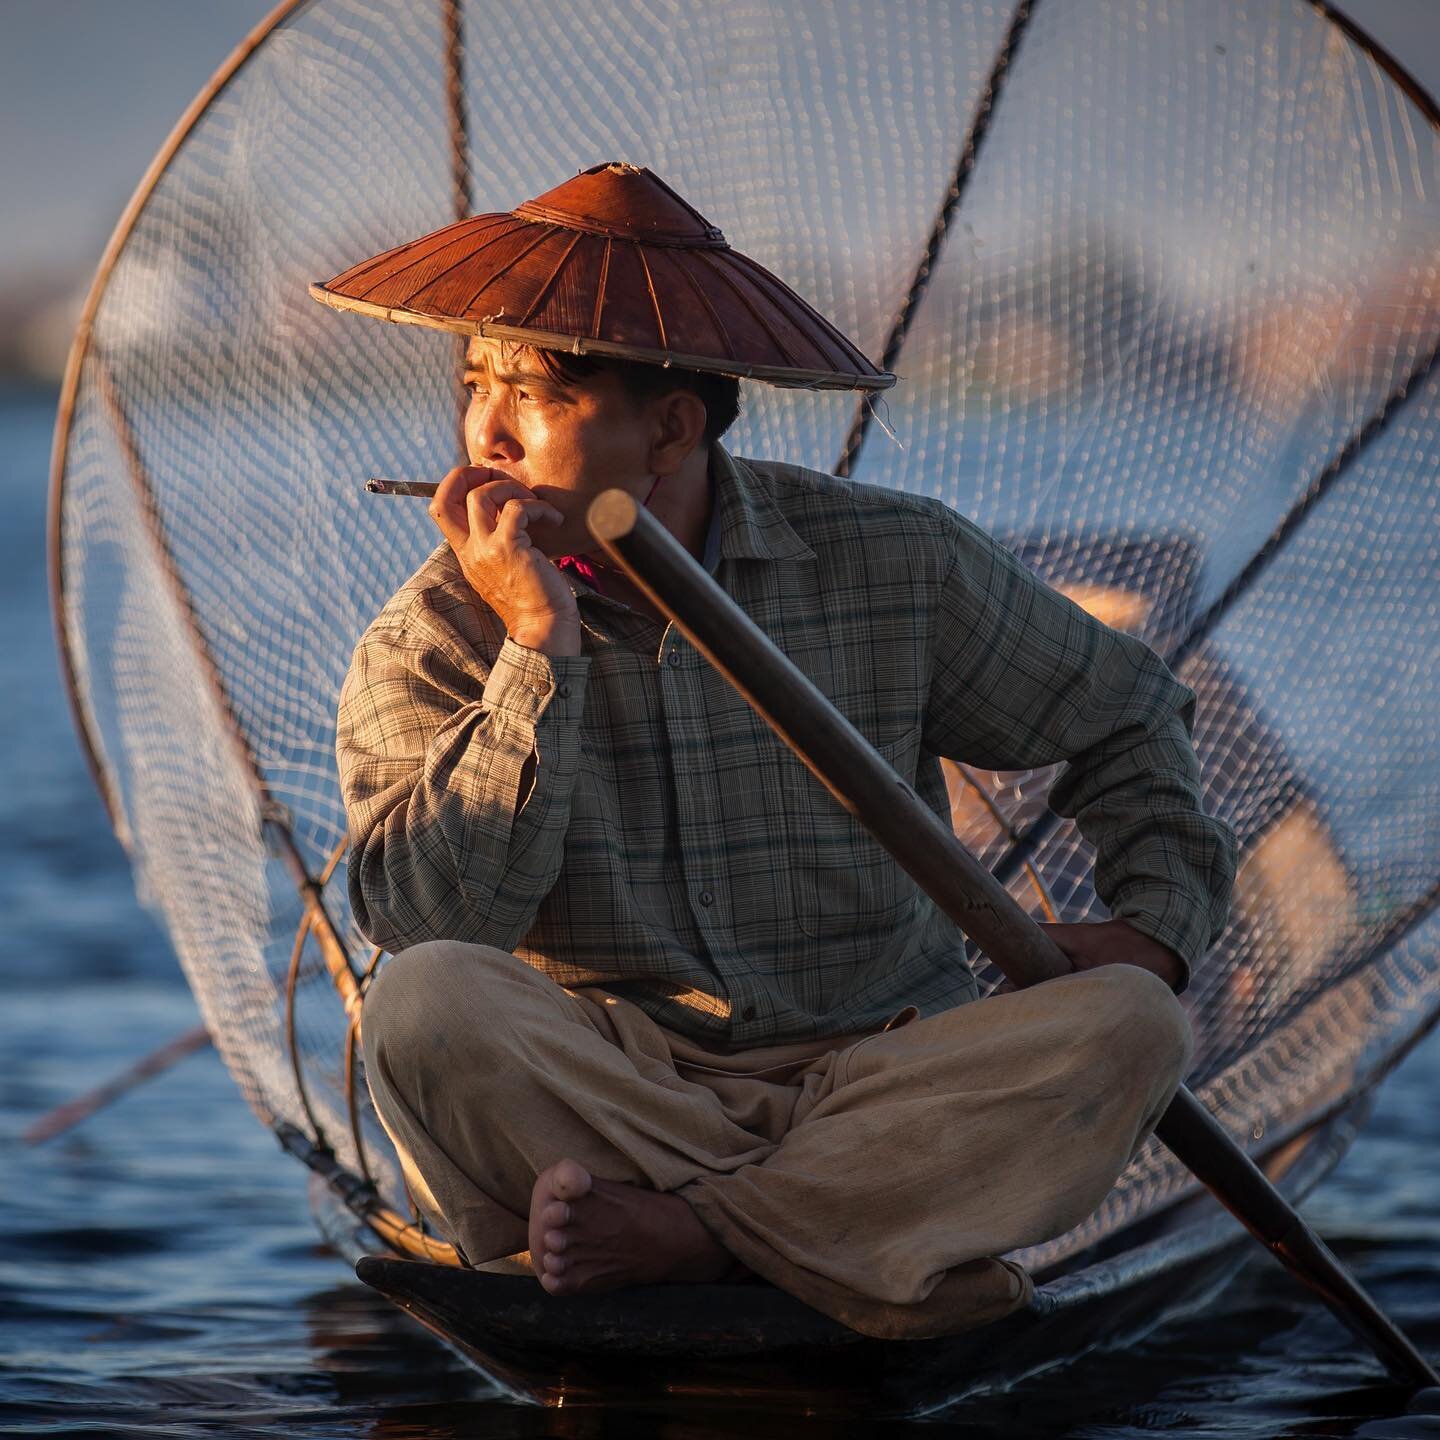 Lake Inle fisherman #myanmar #lakeinle #neverstopexploring #dubaiphotographer #people